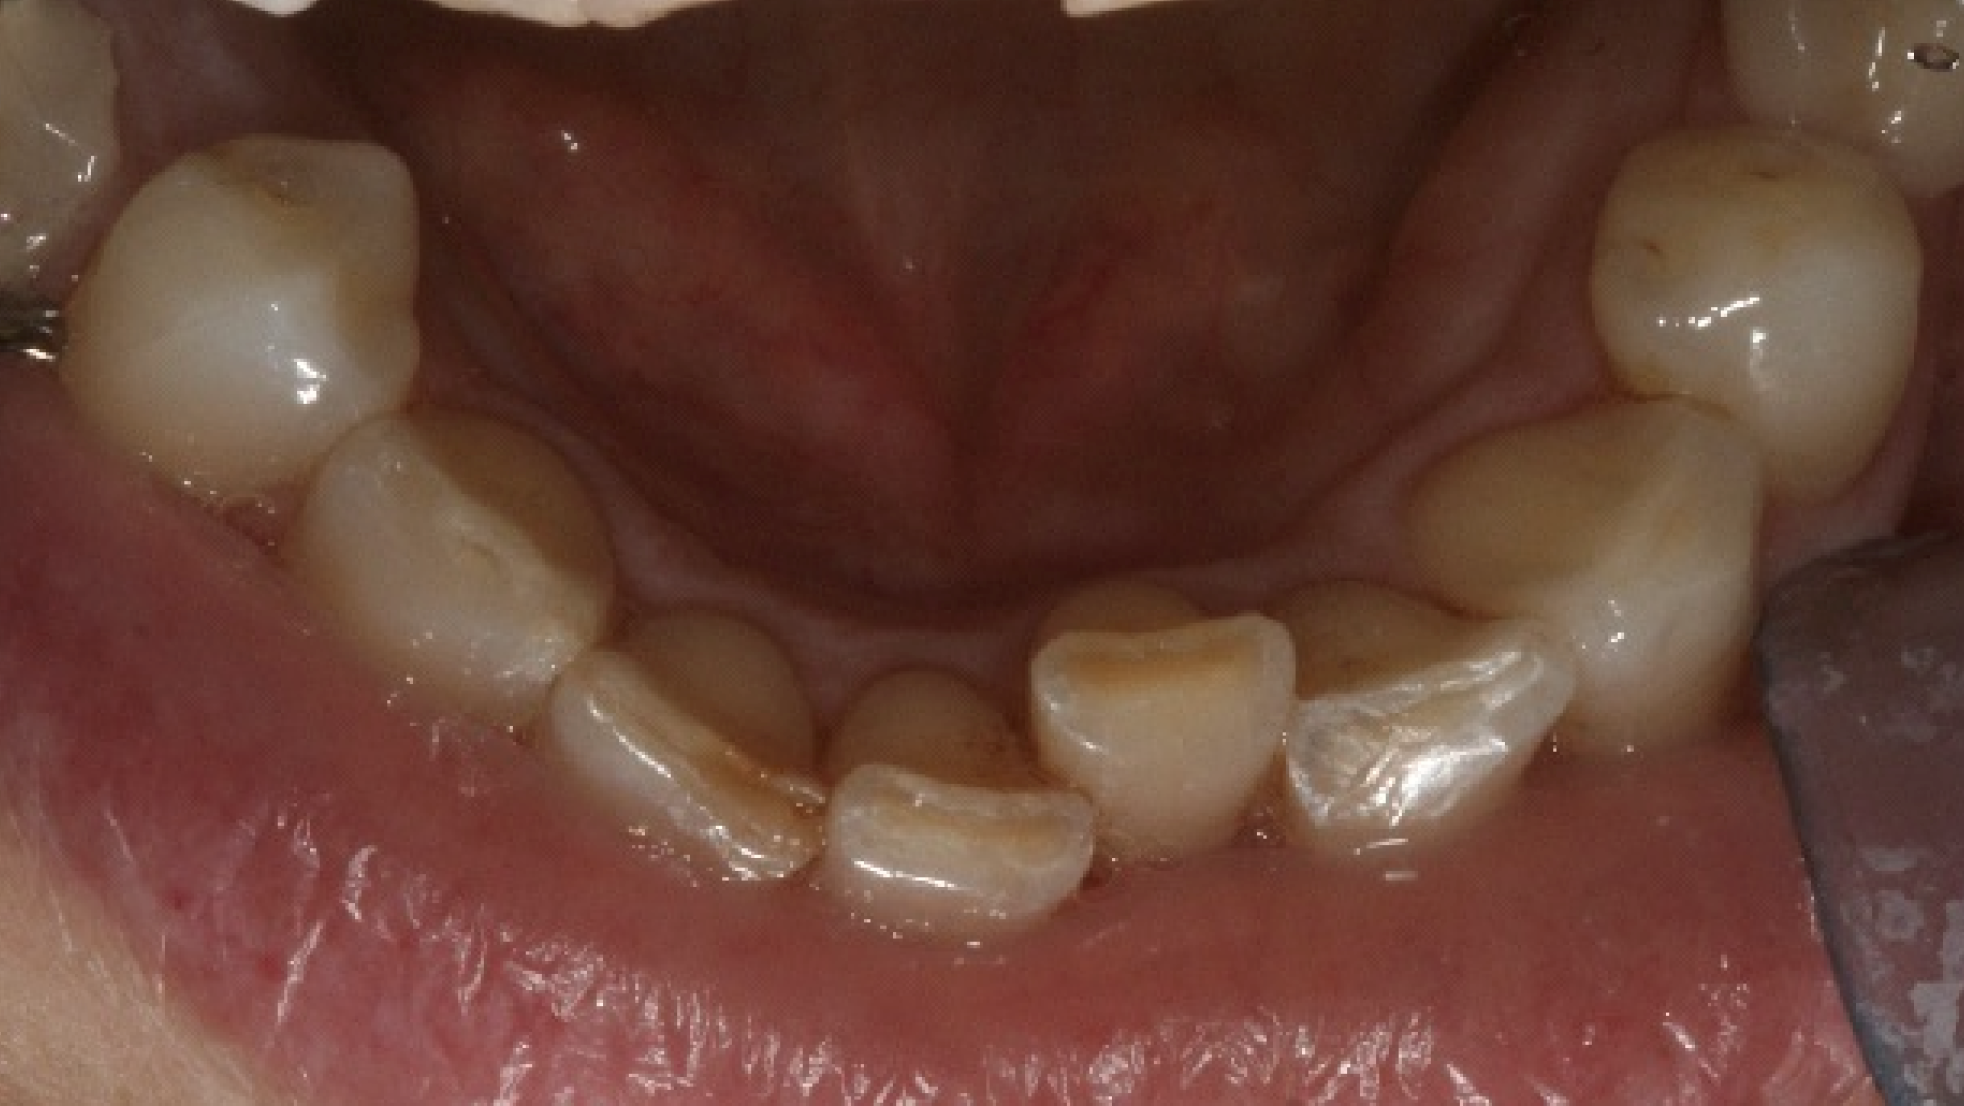 Fig. 3: 2004—wear on the mandibular teeth and crowding.